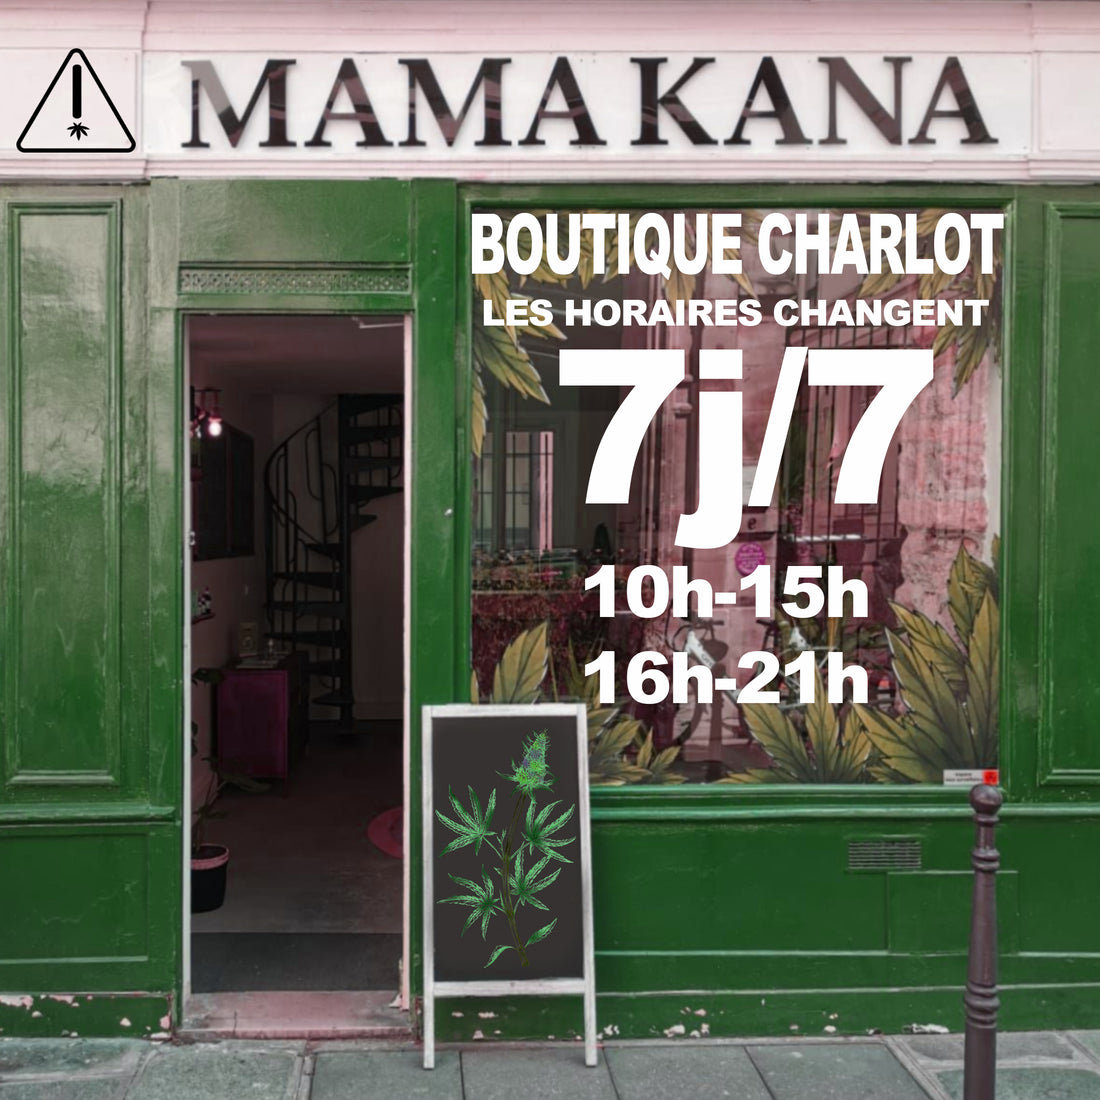 Boutique Charlot - Οι ώρες λειτουργίας αλλάζουν!